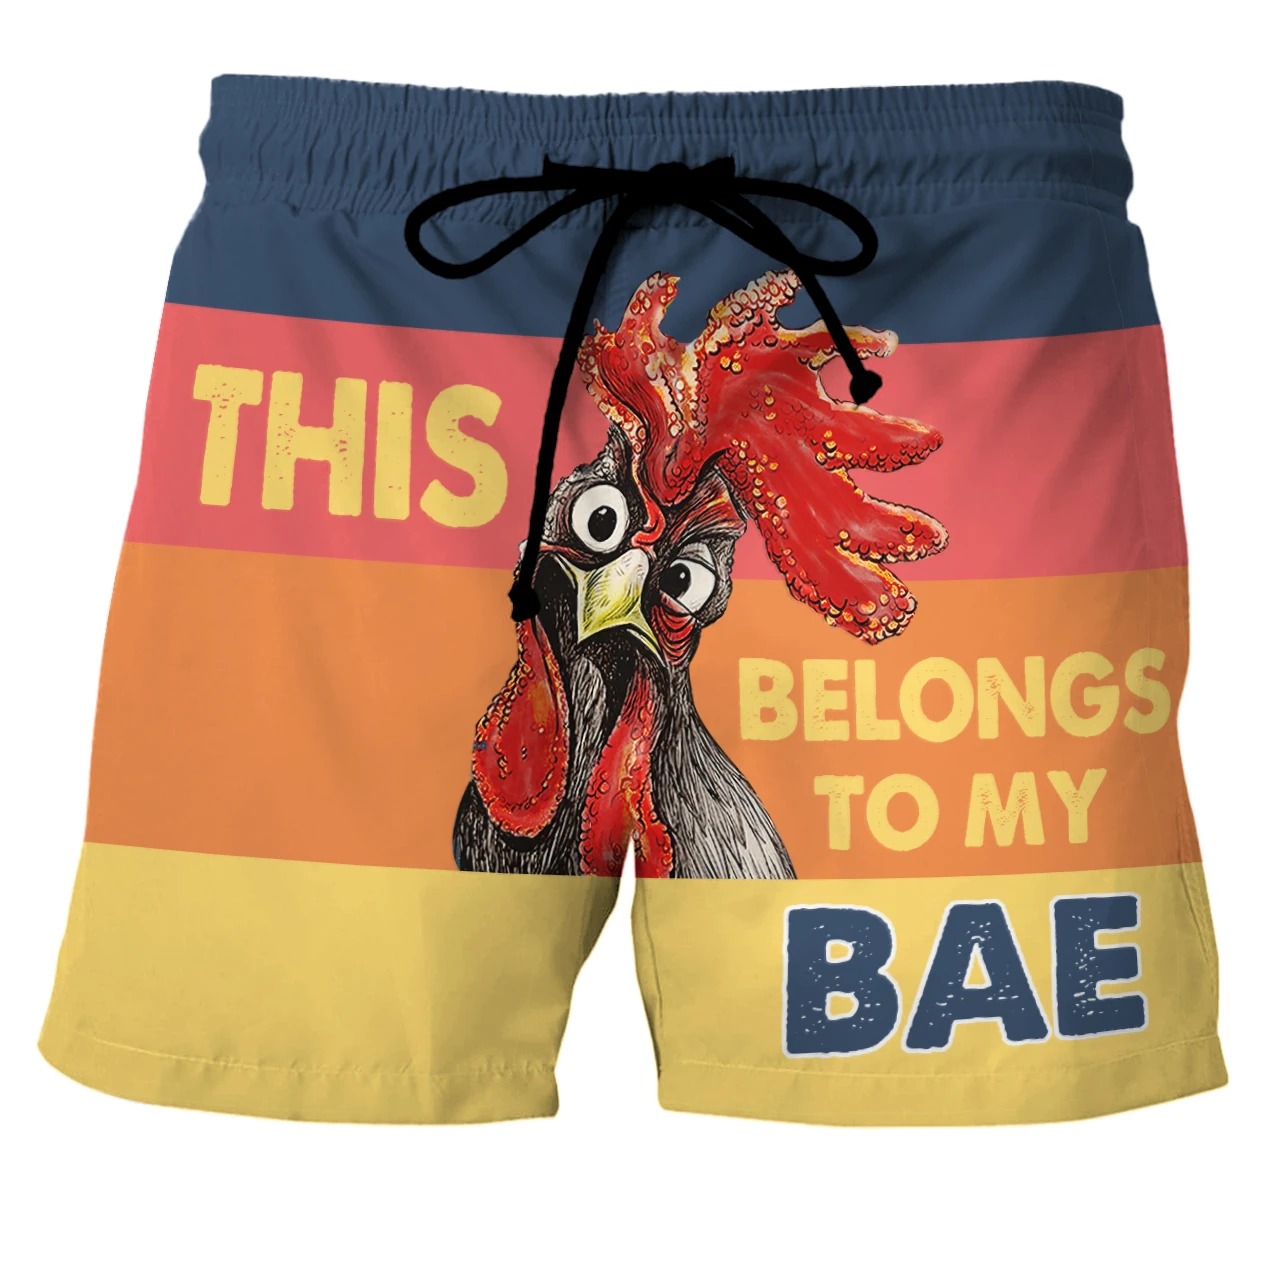 This cock belongs to my bae beach shorts